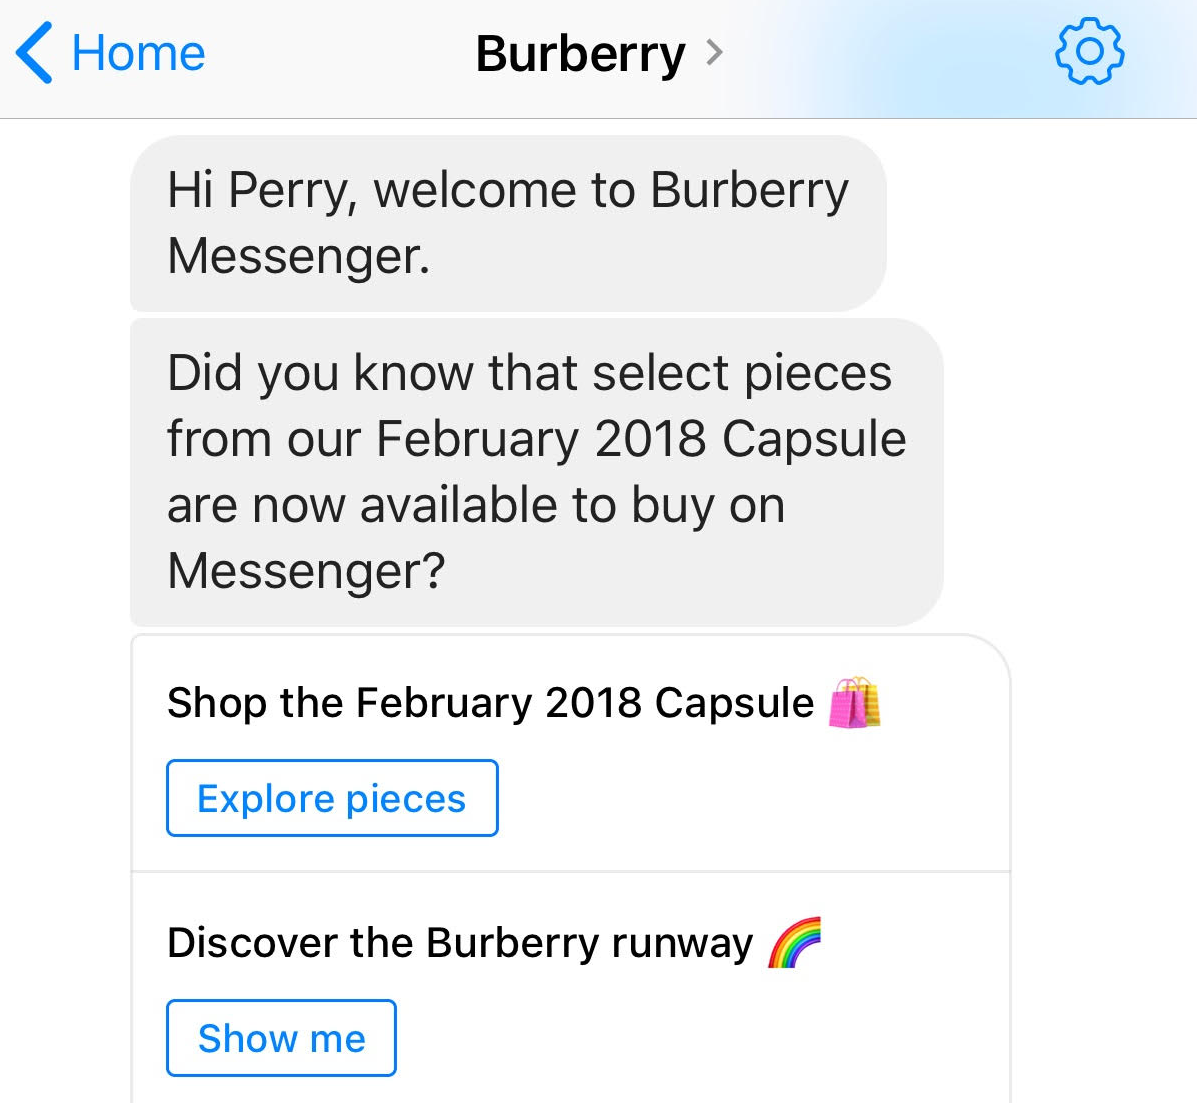 Burberry chatbot